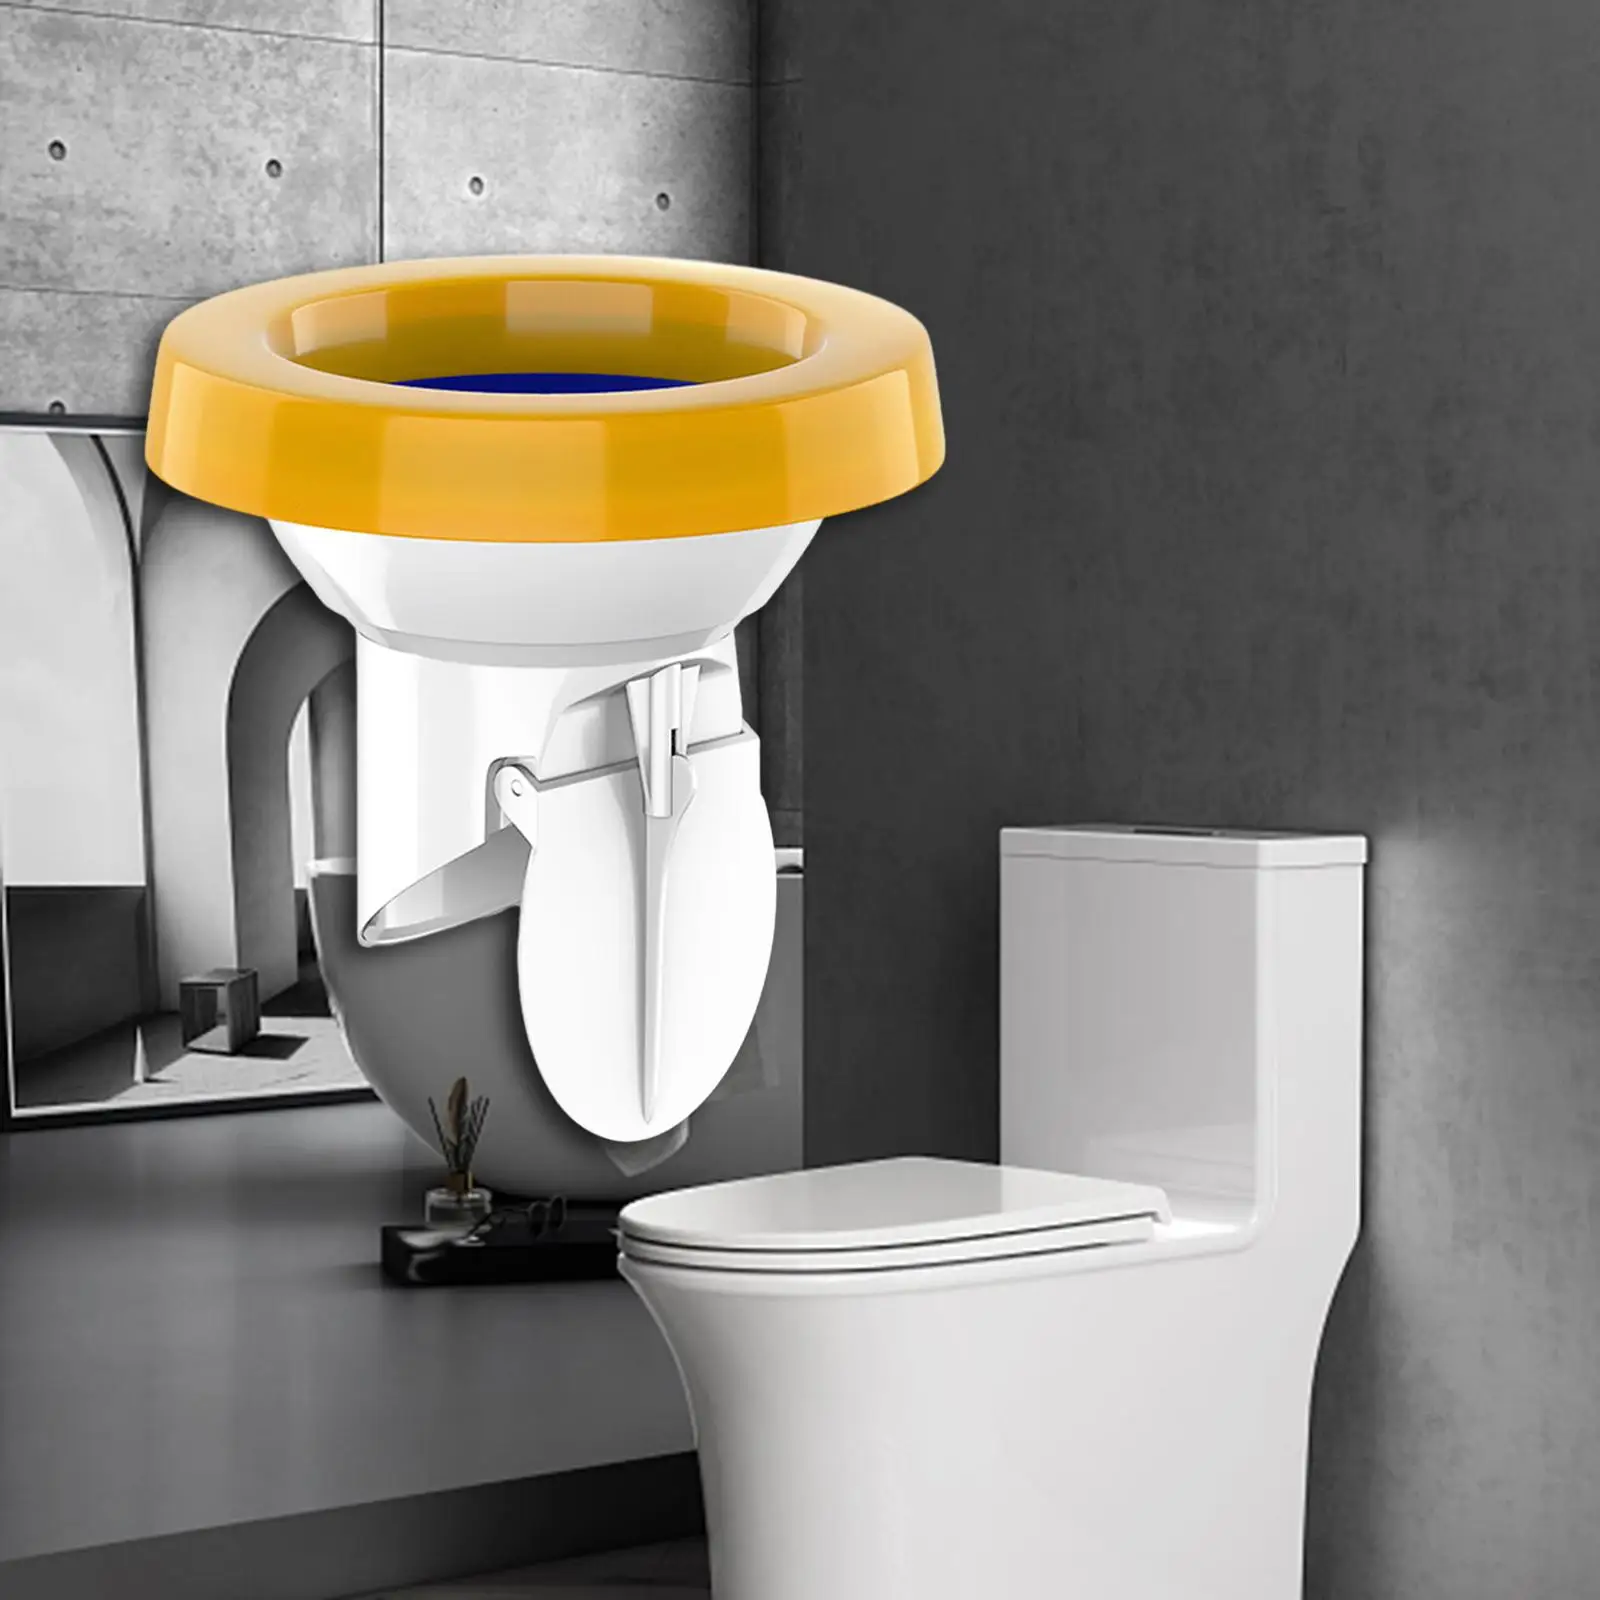 Toilet Flange Ring Durable Silicone Sealing Toilet Pits Blocking Odor Plug